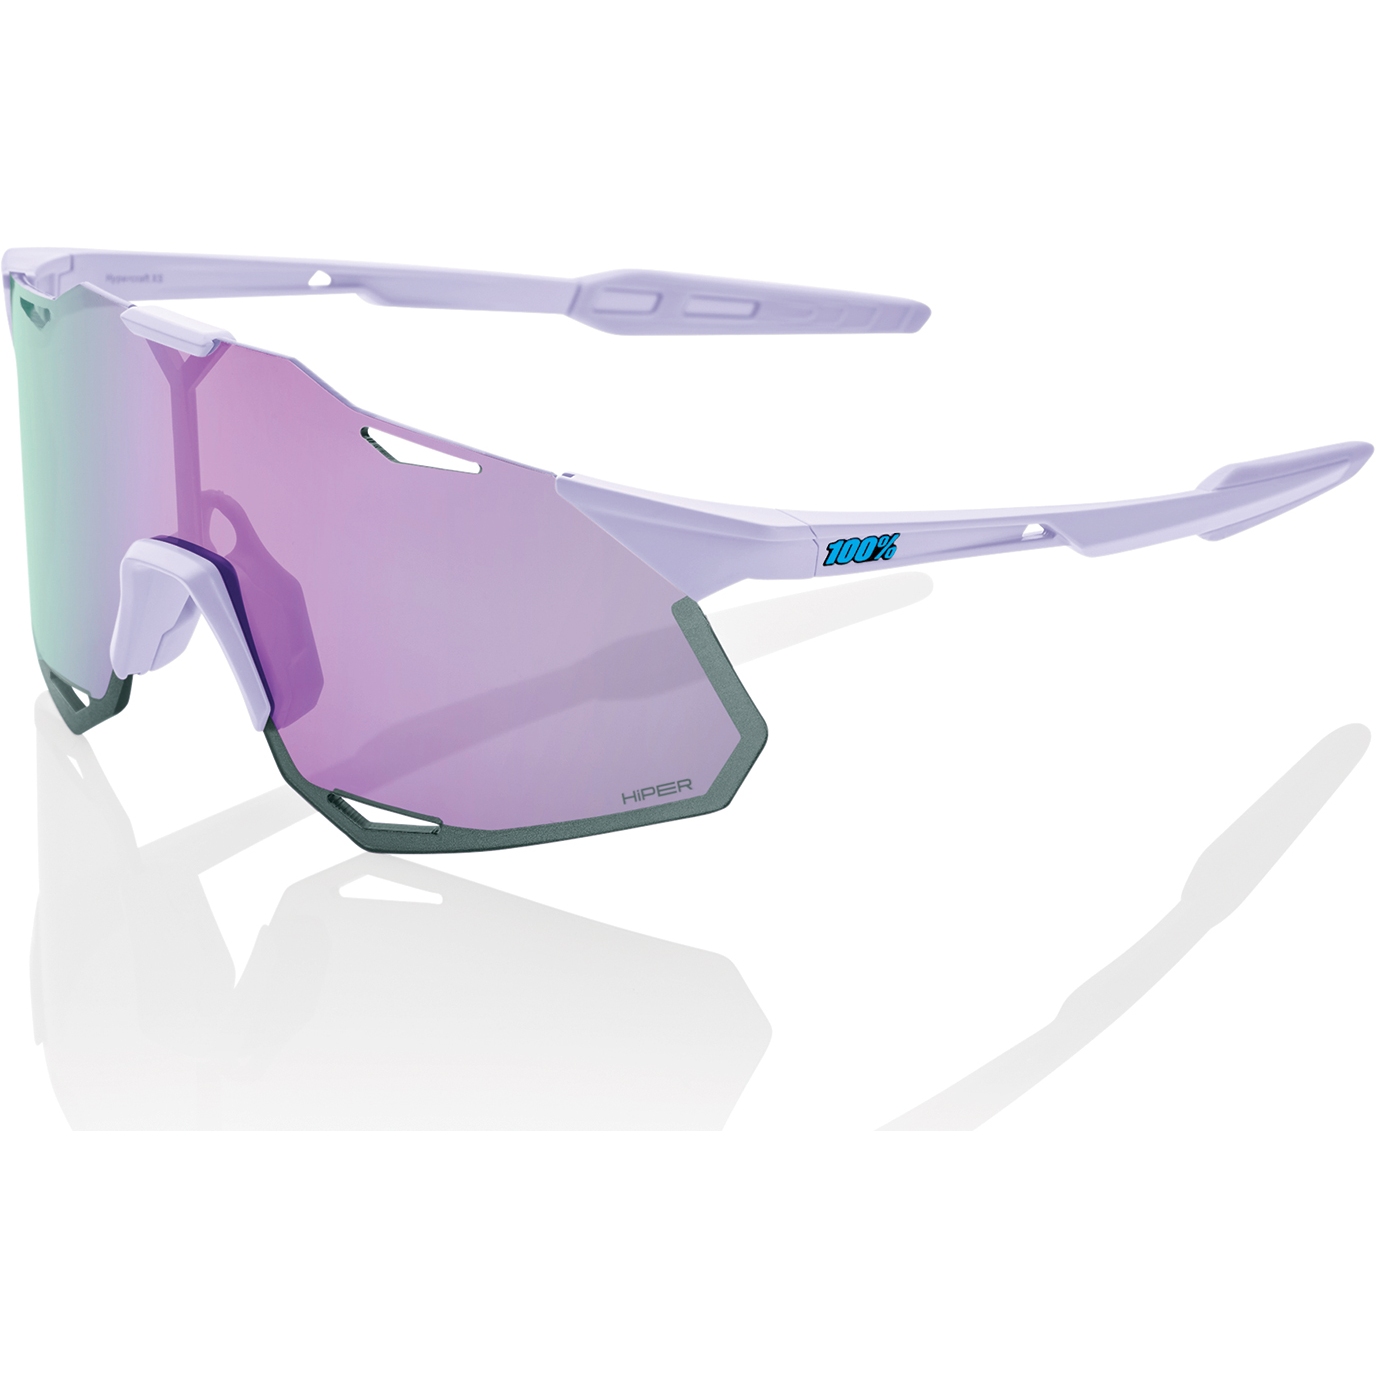 Productfoto van 100% Hypercraft XS Glasses - HiPER Mirror Lens - Soft Tact Lavender / Lavender + Clear